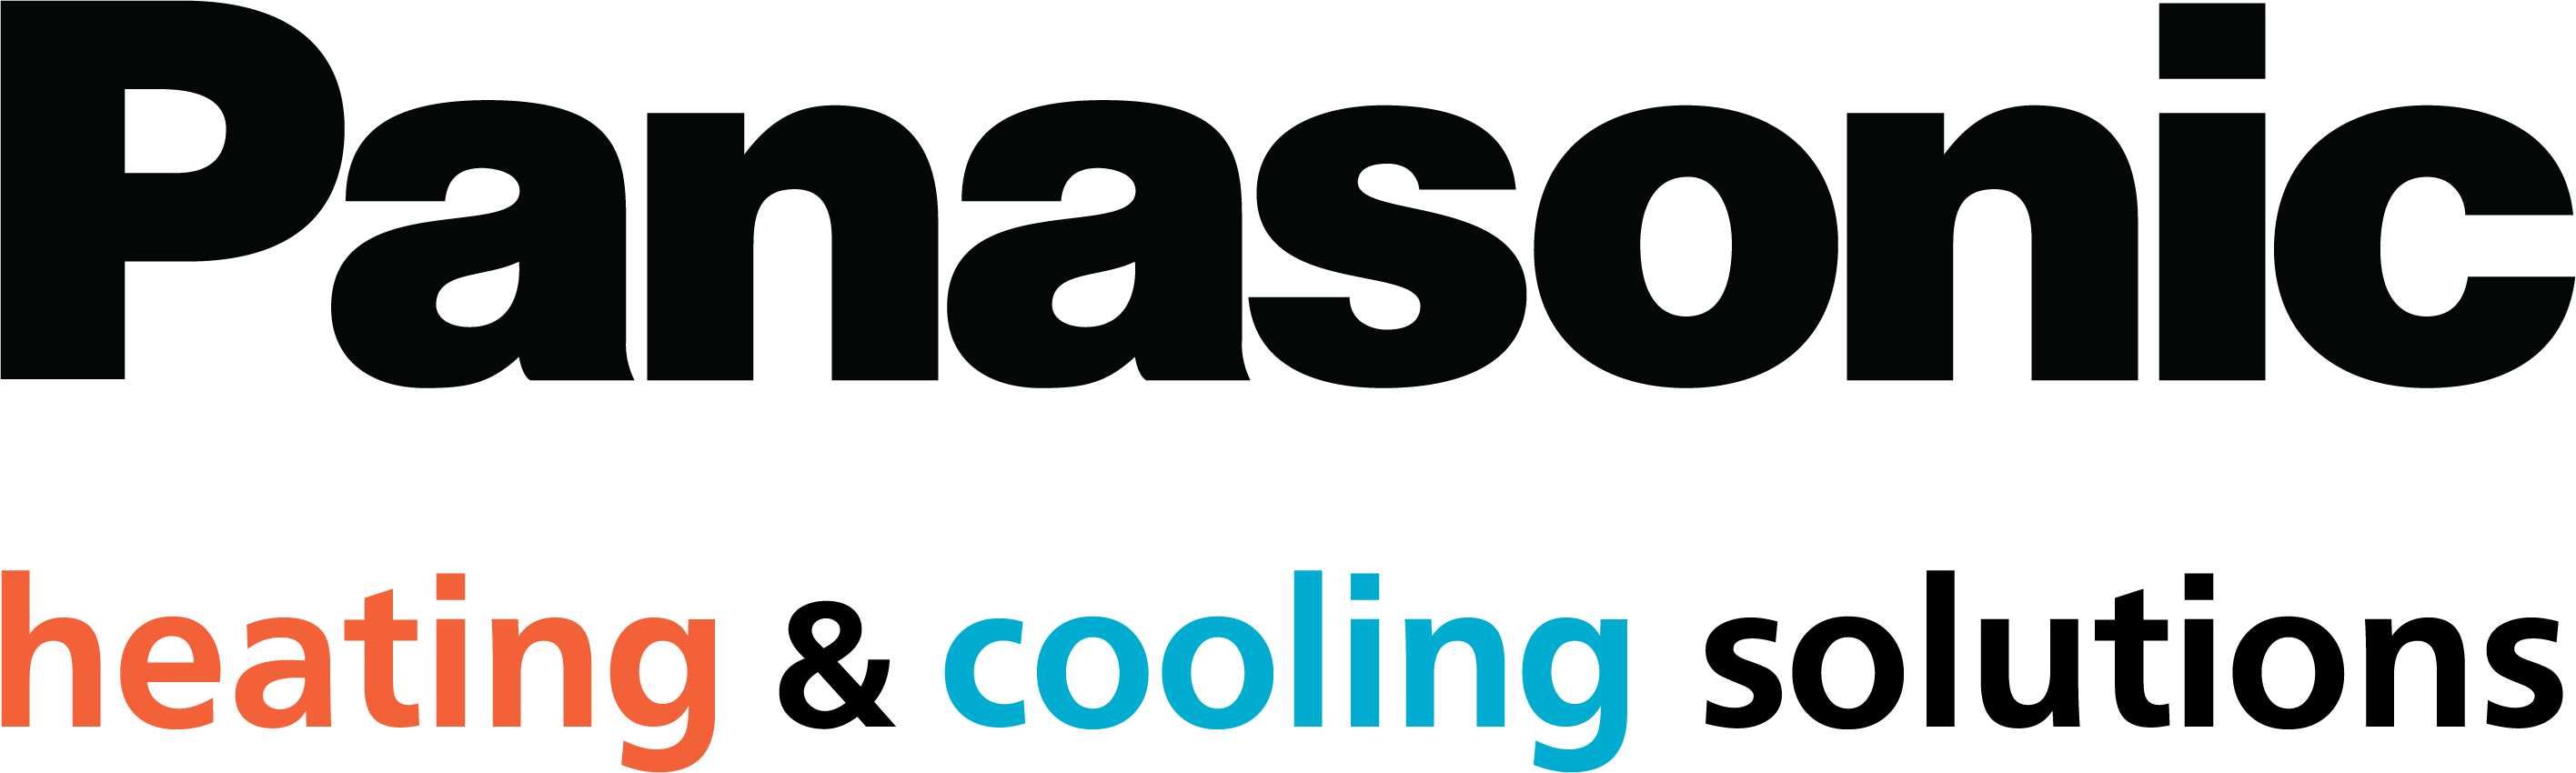 108983161 8676 panasonic heatingcooling logo1